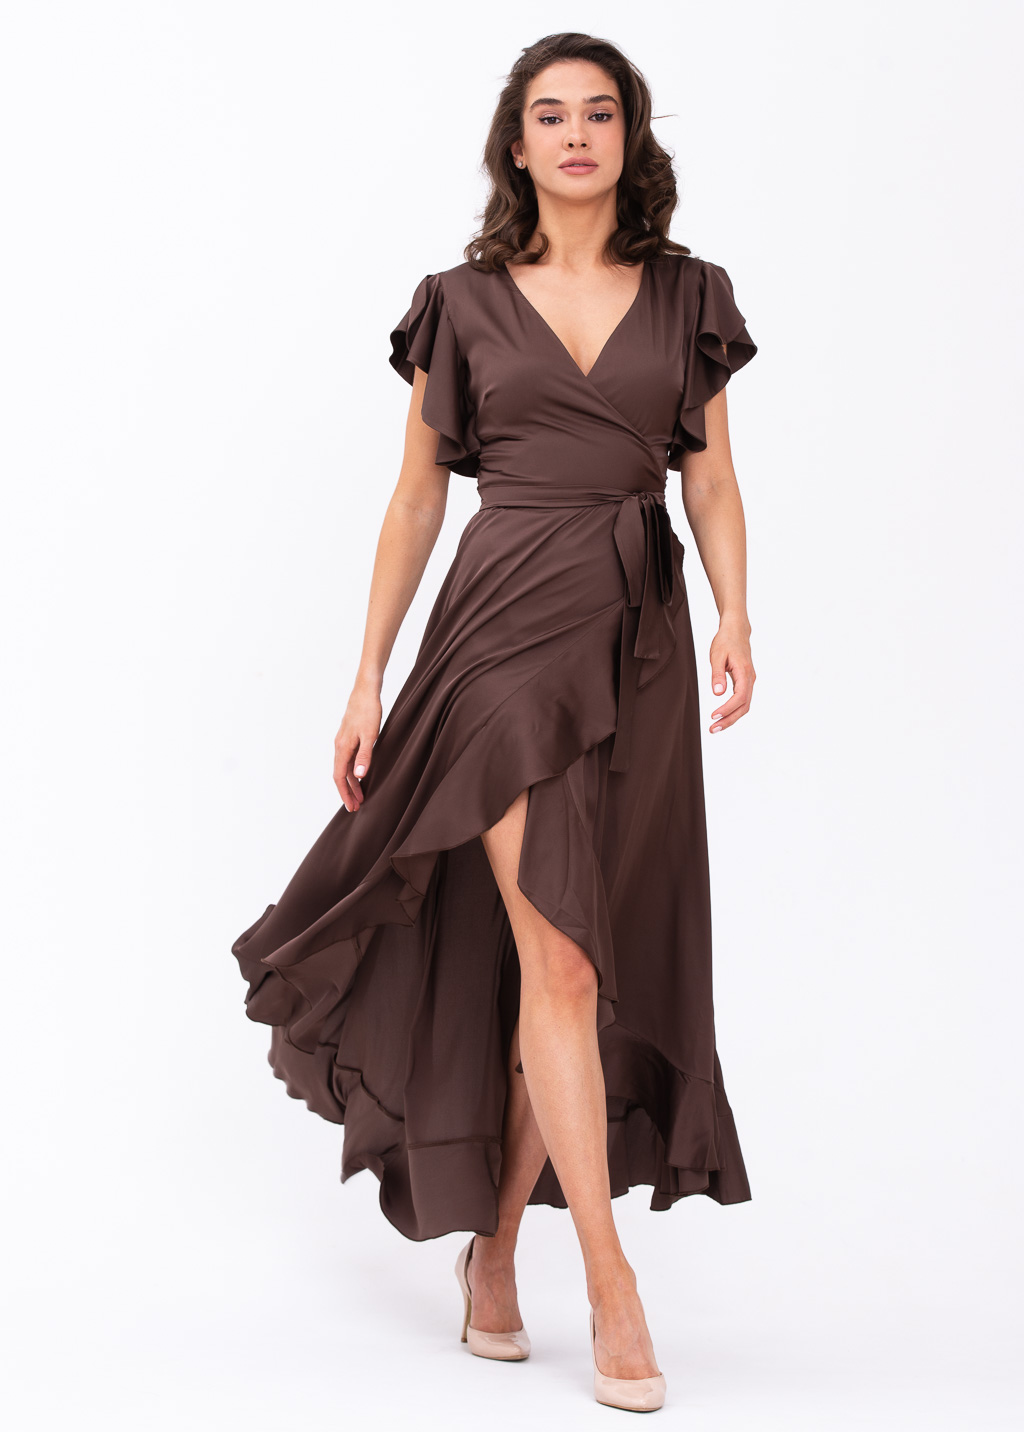 Chocolate brown wrap dress